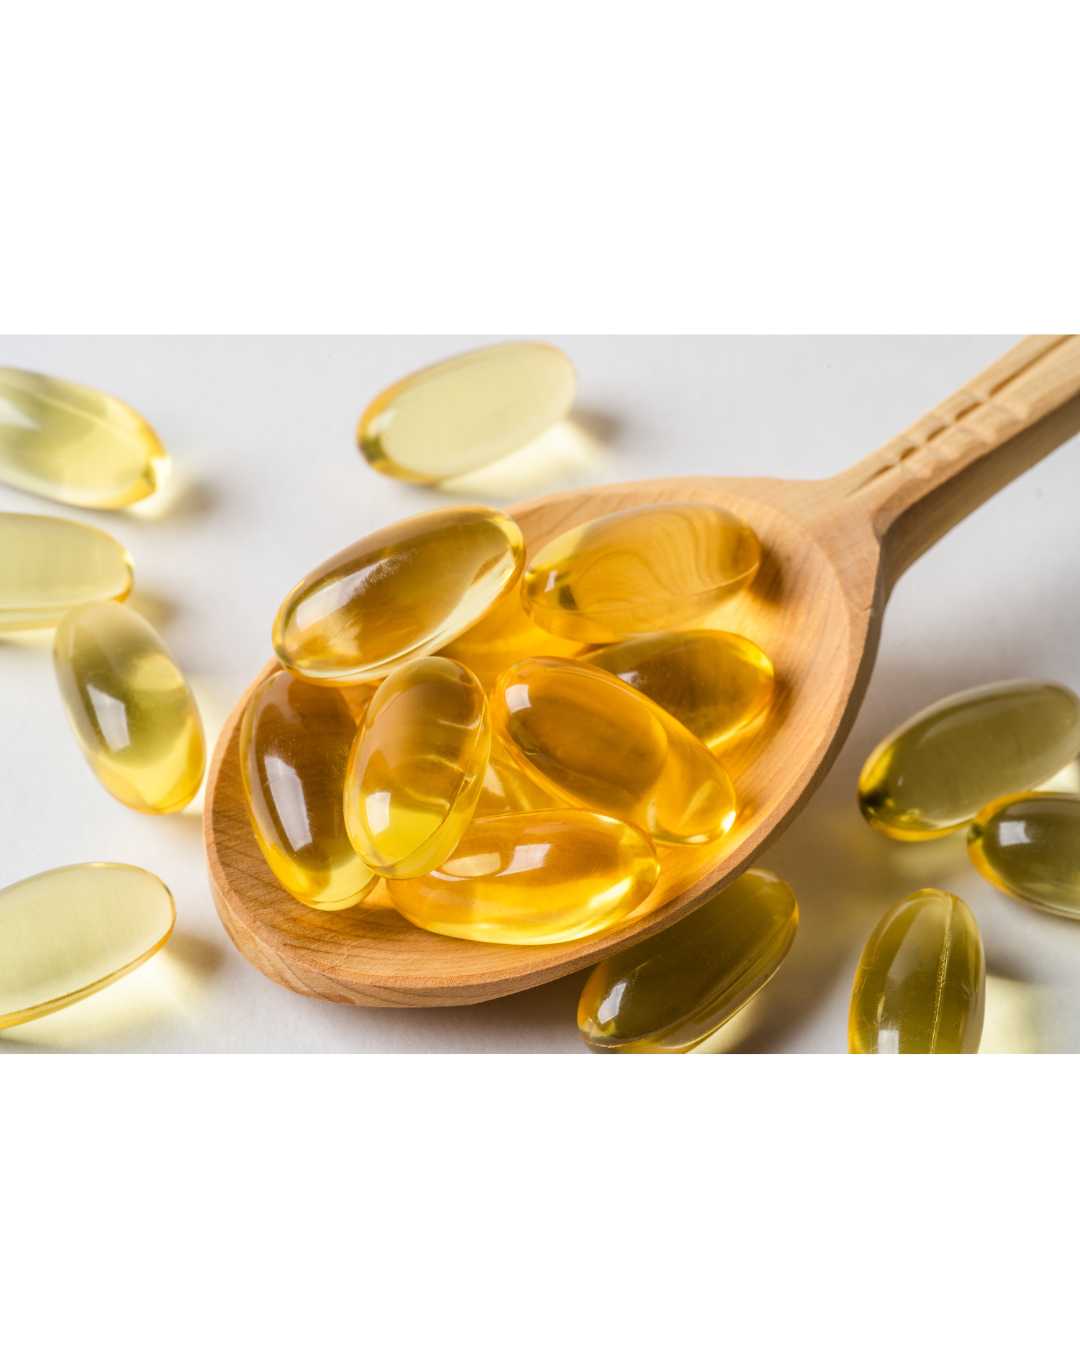 omega-3 fatty acids tablets